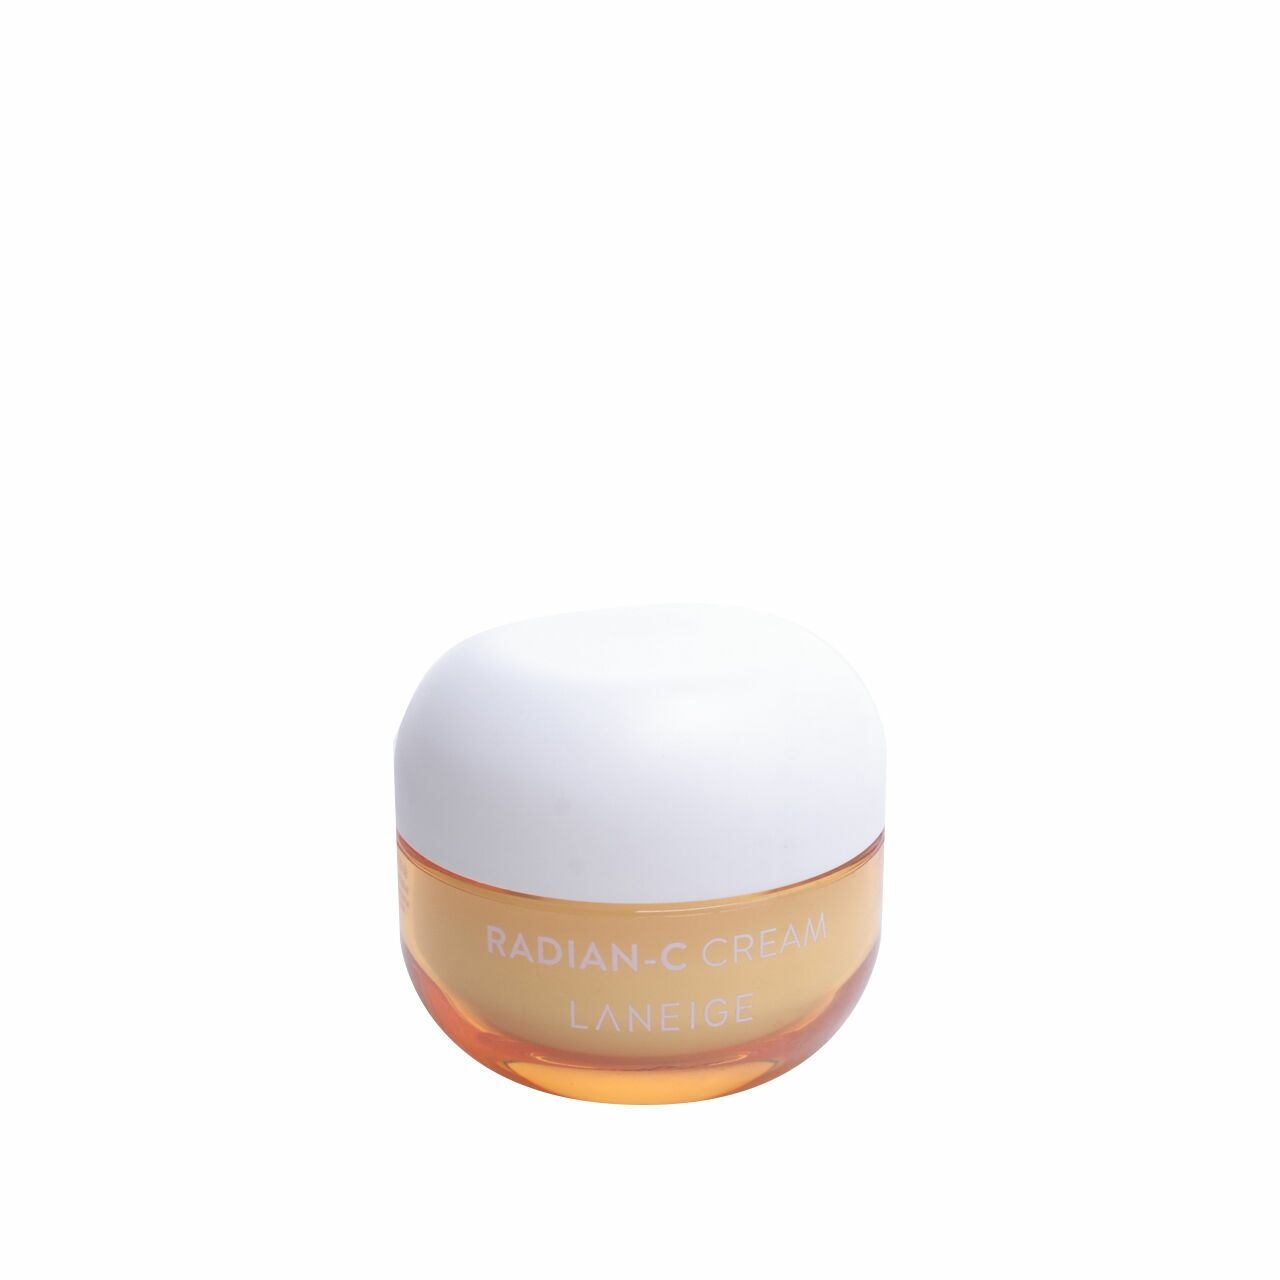 Laneige Radian C Cream Skin Care	